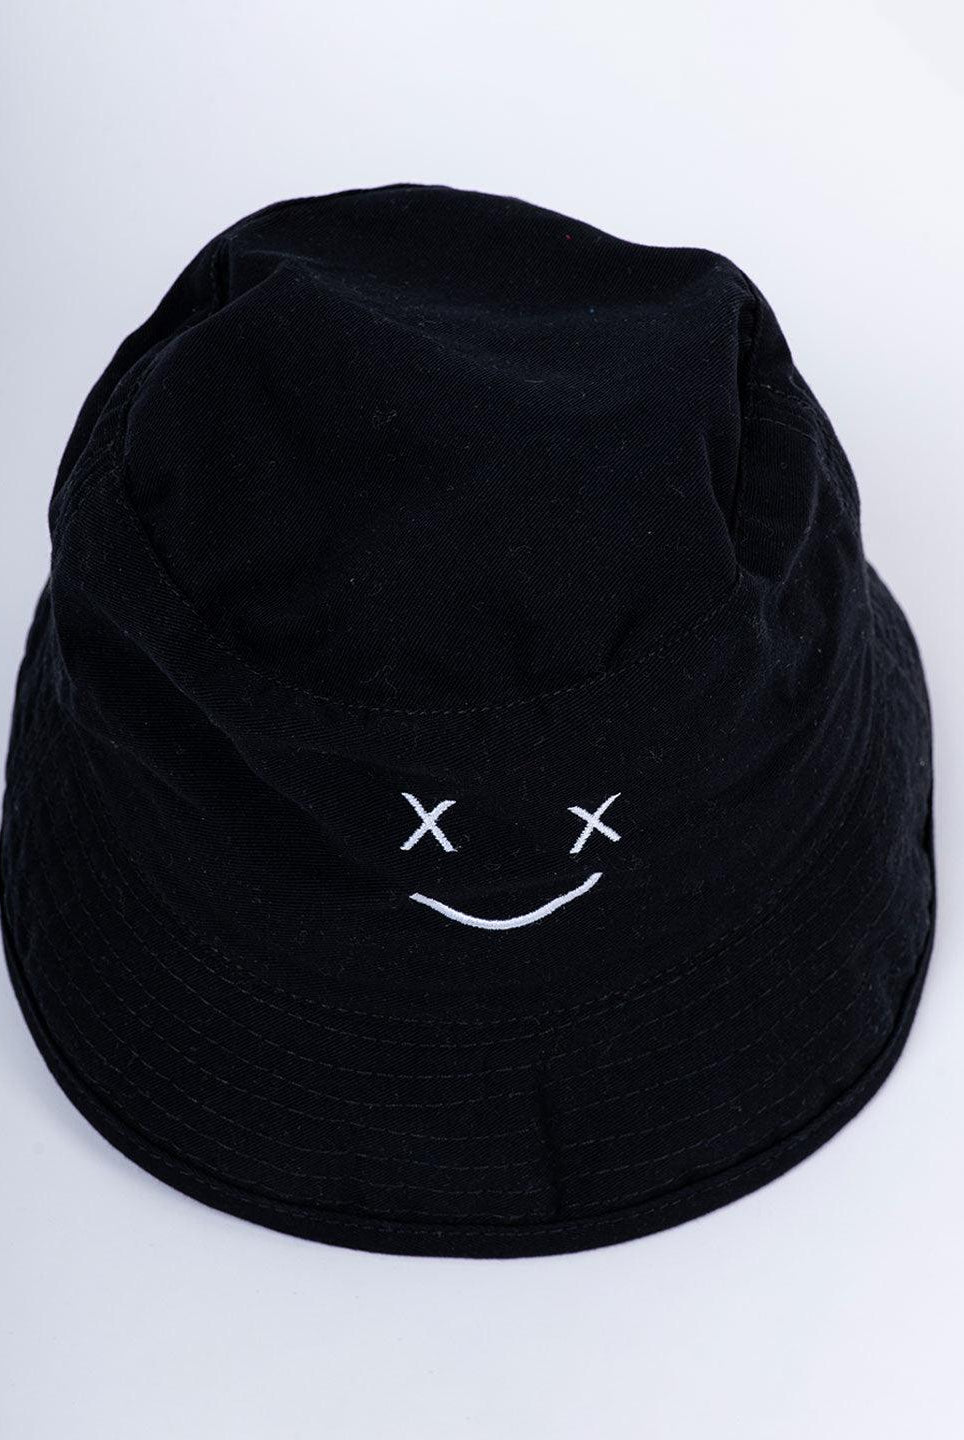 Marshmello Embroidered Black Regular Size Unisex Hat - Tistabene